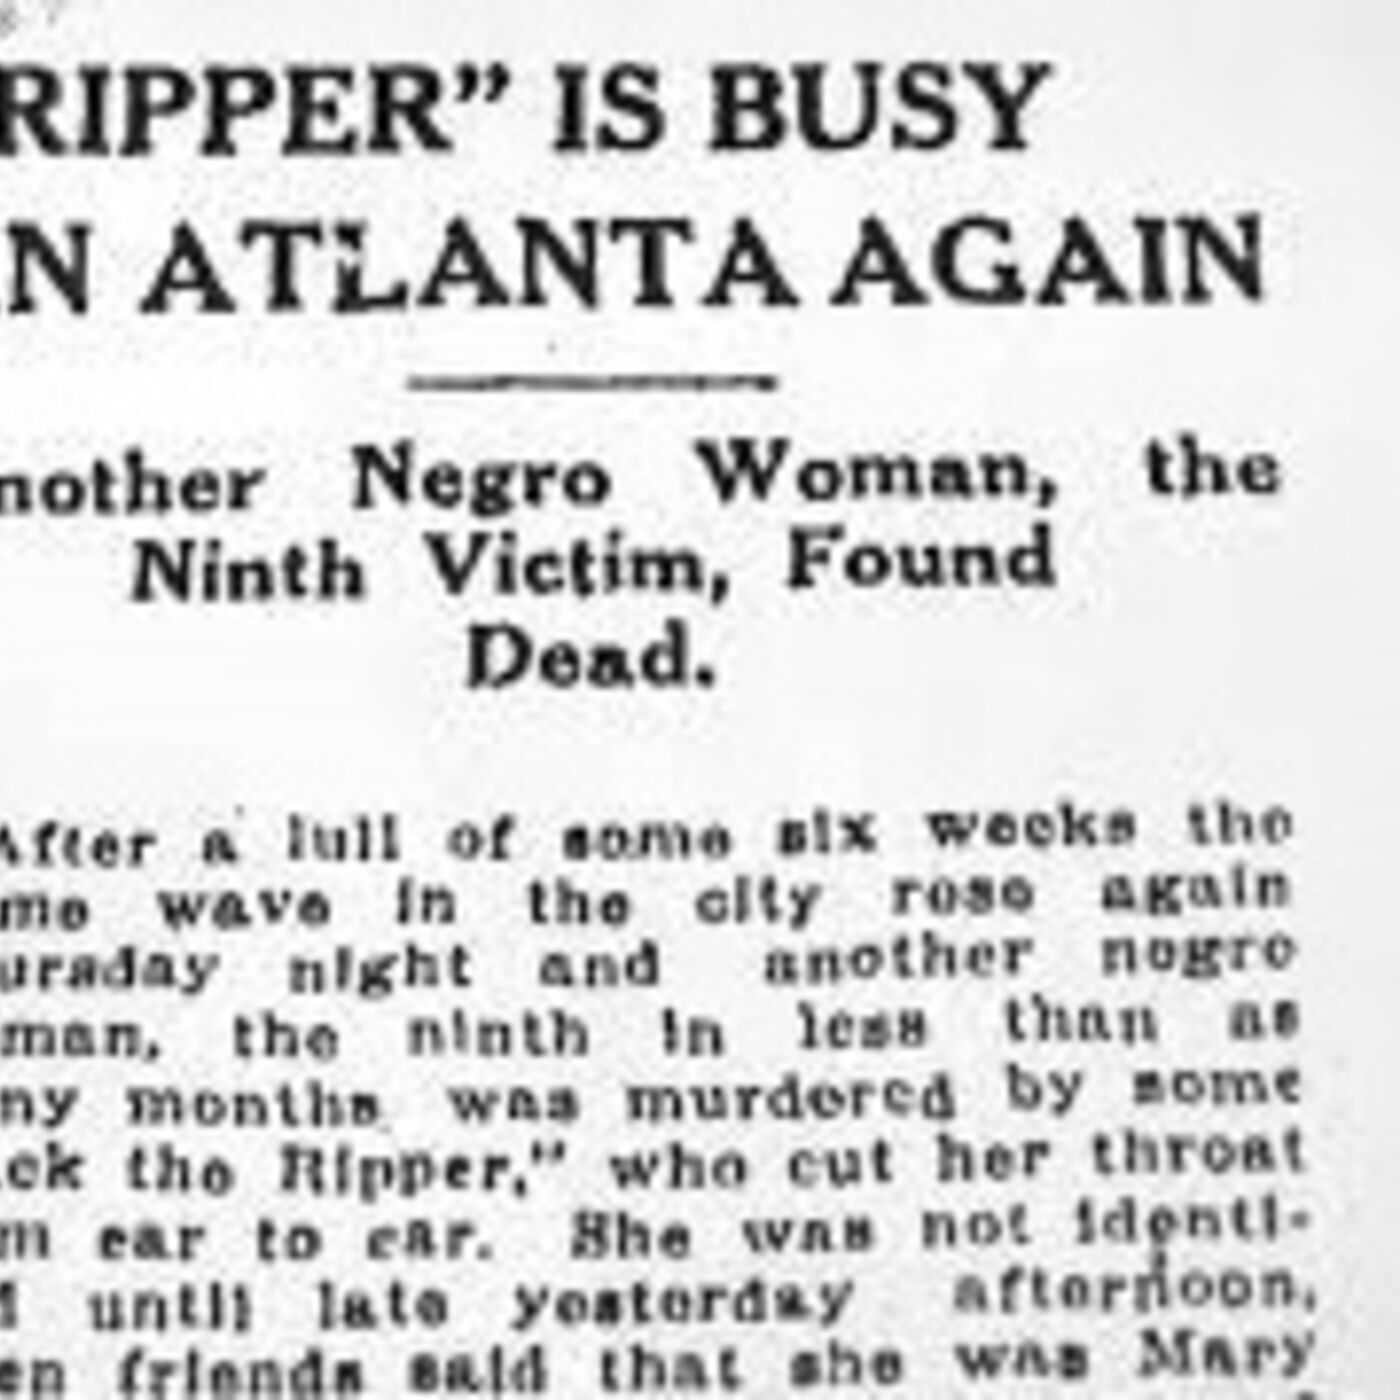 Ep 77 - The Fury of The Atlanta Ripper